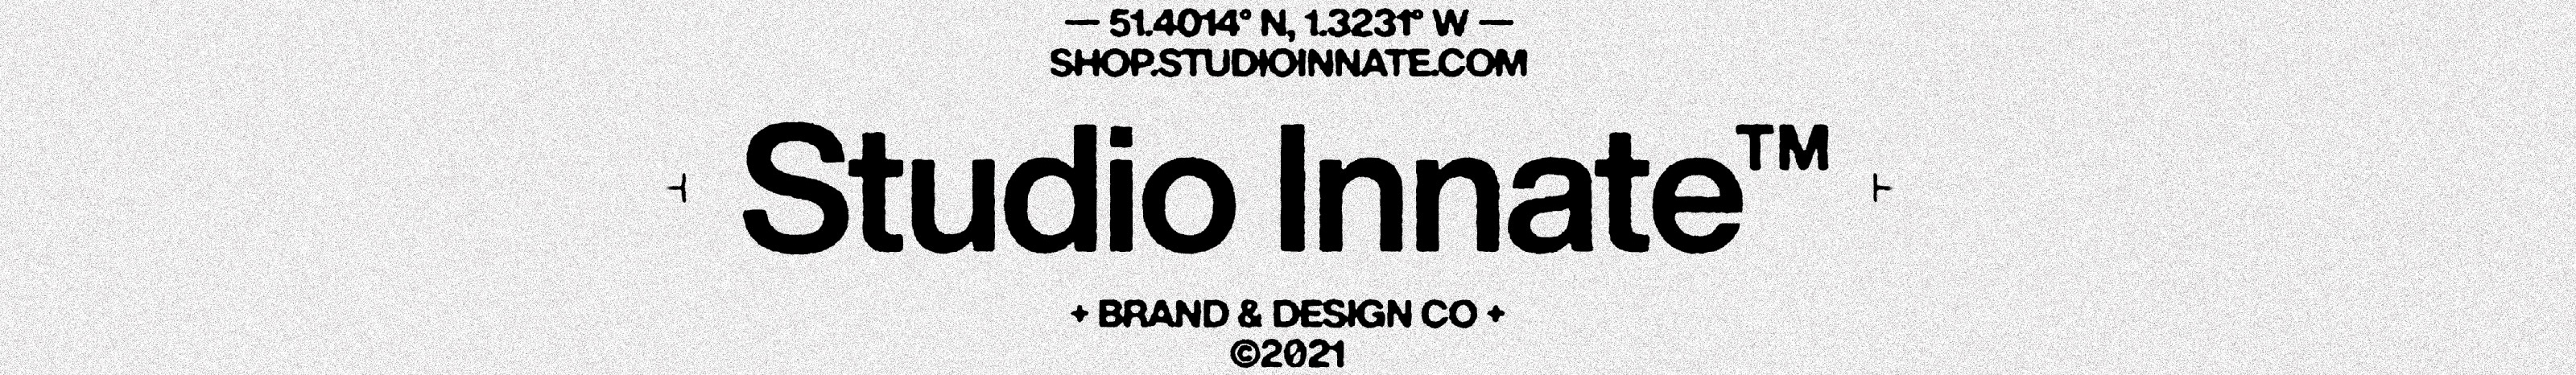 Banner de perfil de Studio Innate